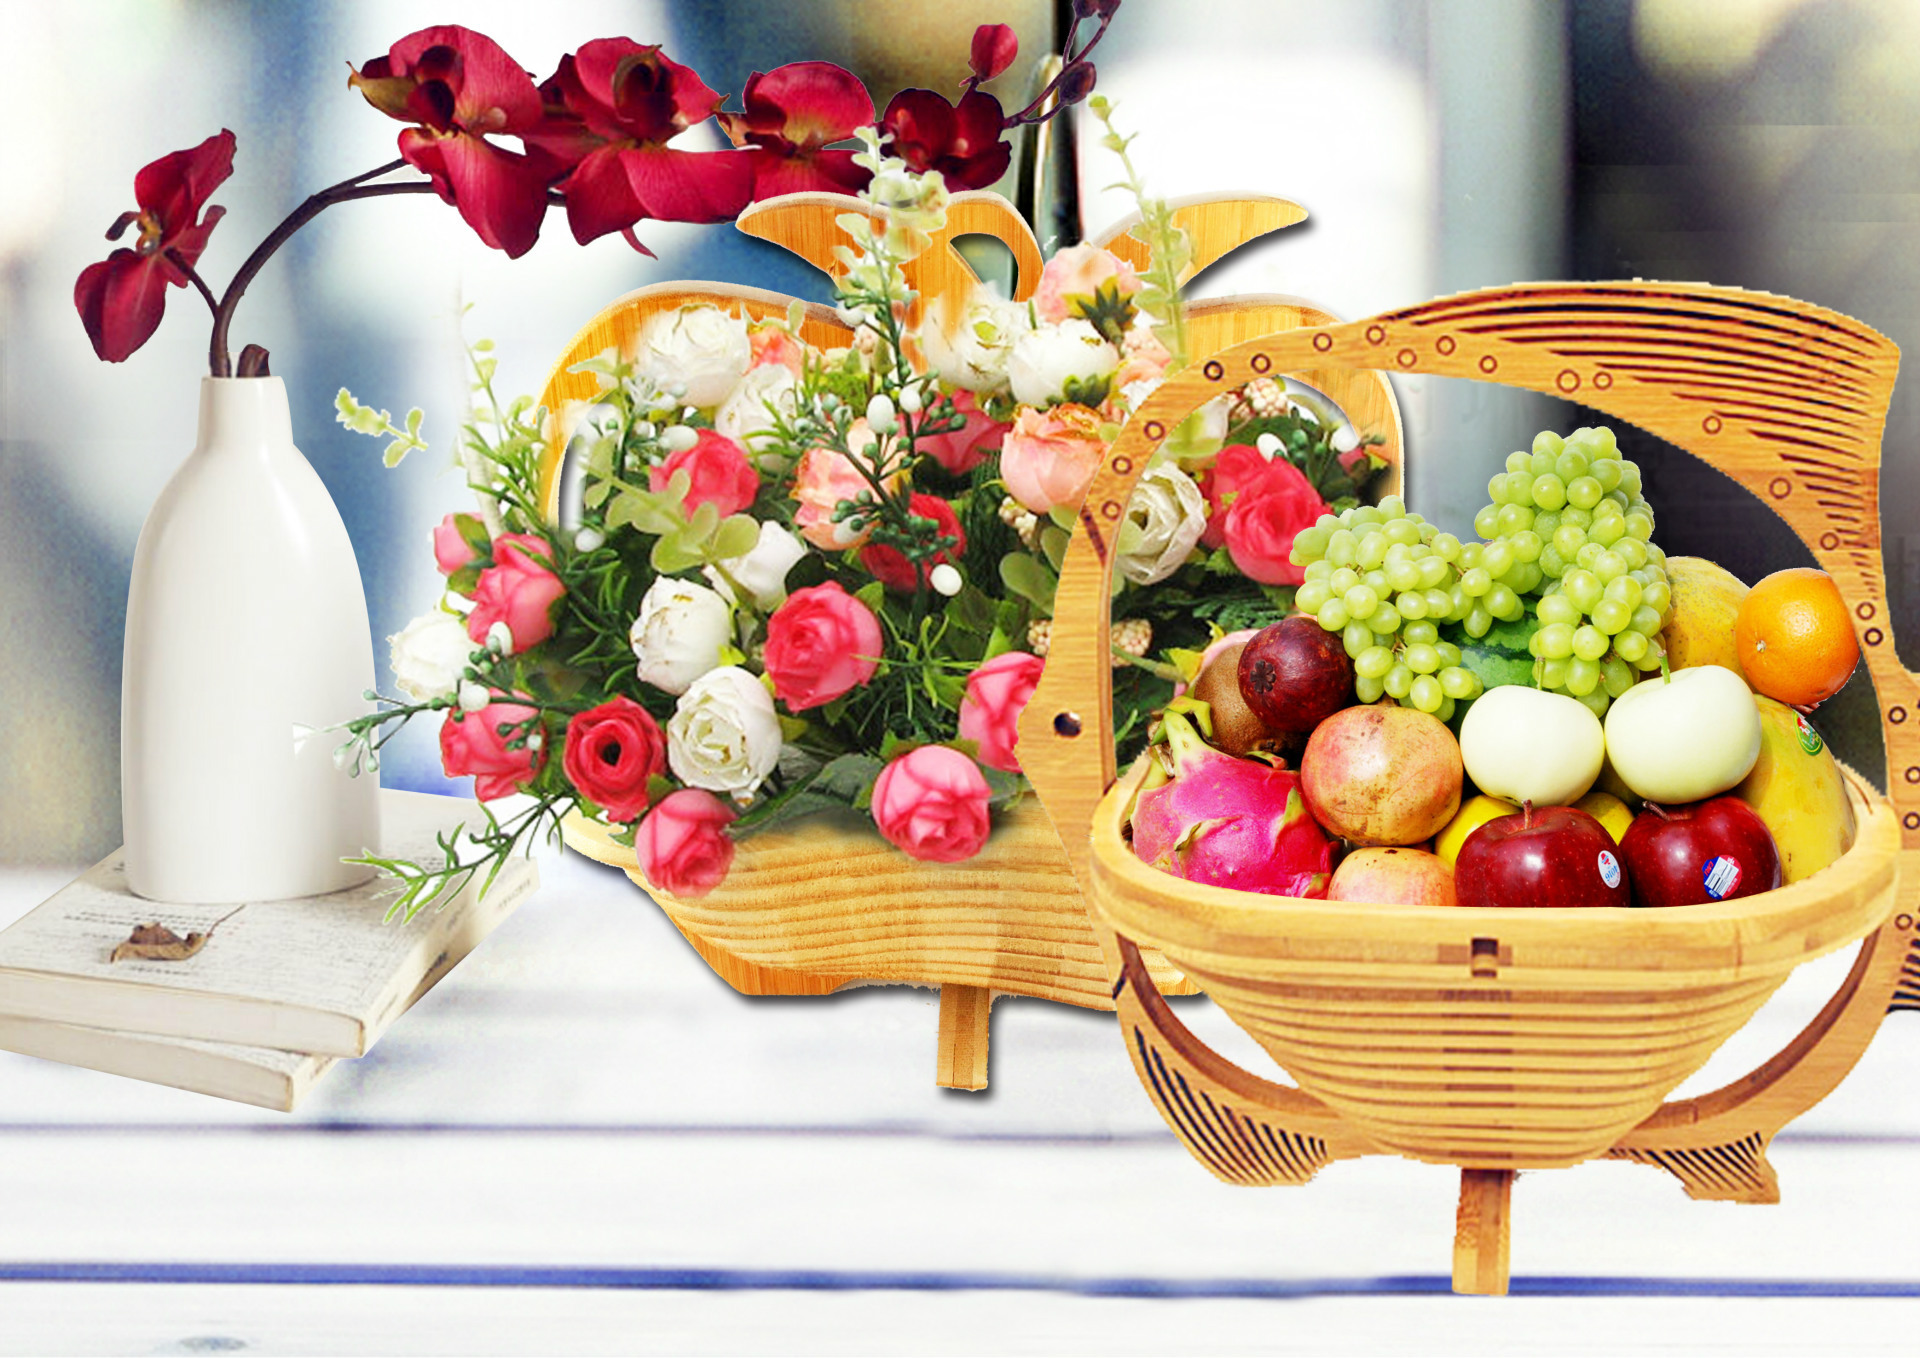 cc0可商用食品,鲜花,餐桌,水果图片-千叶网